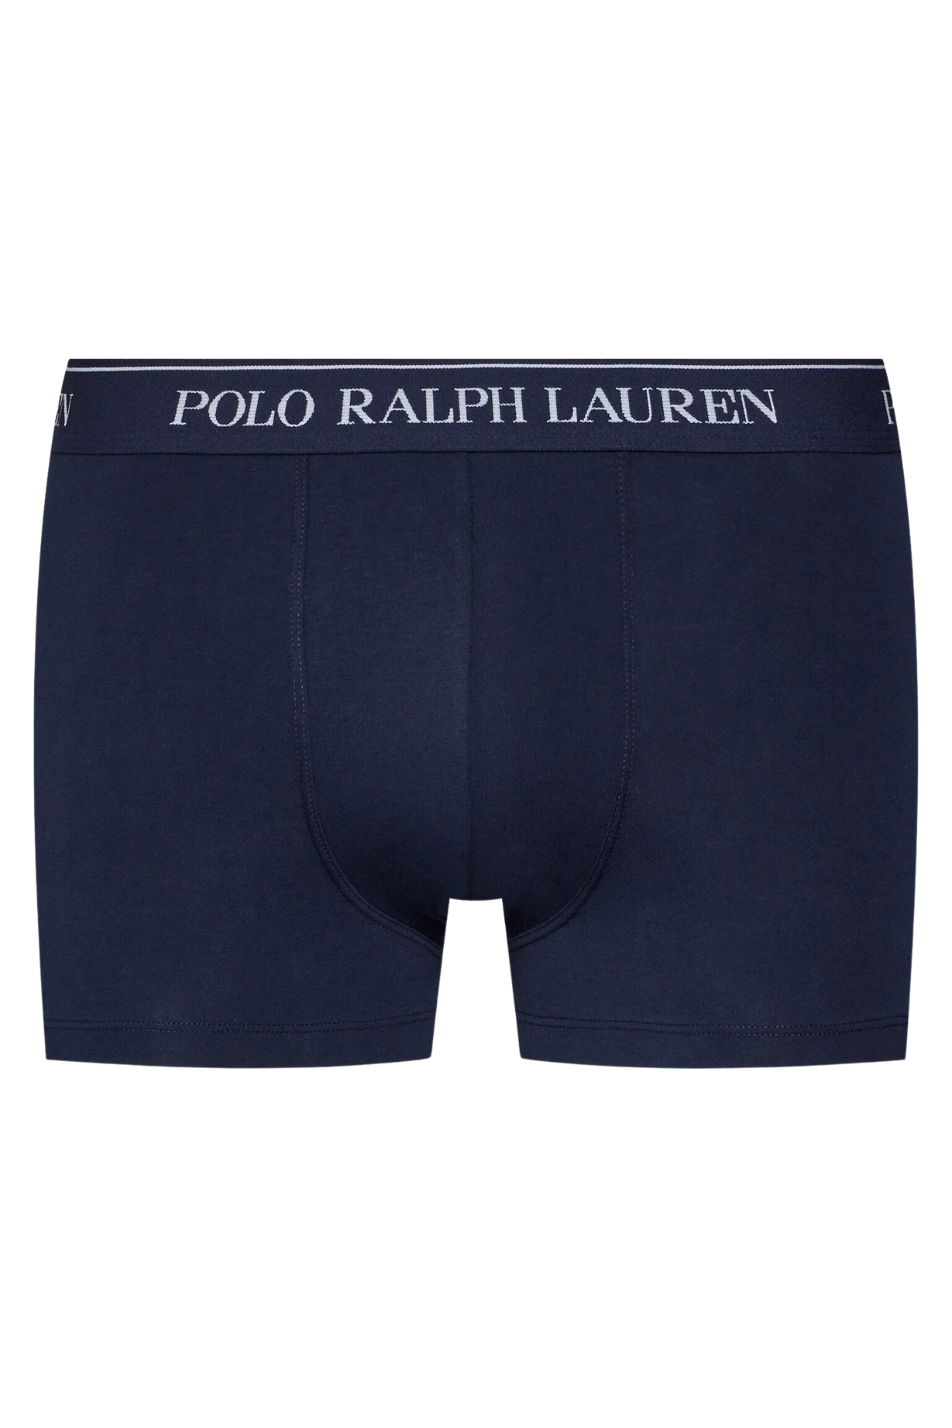 Polo Ralph Lauren 3 Pack Men's Trunk